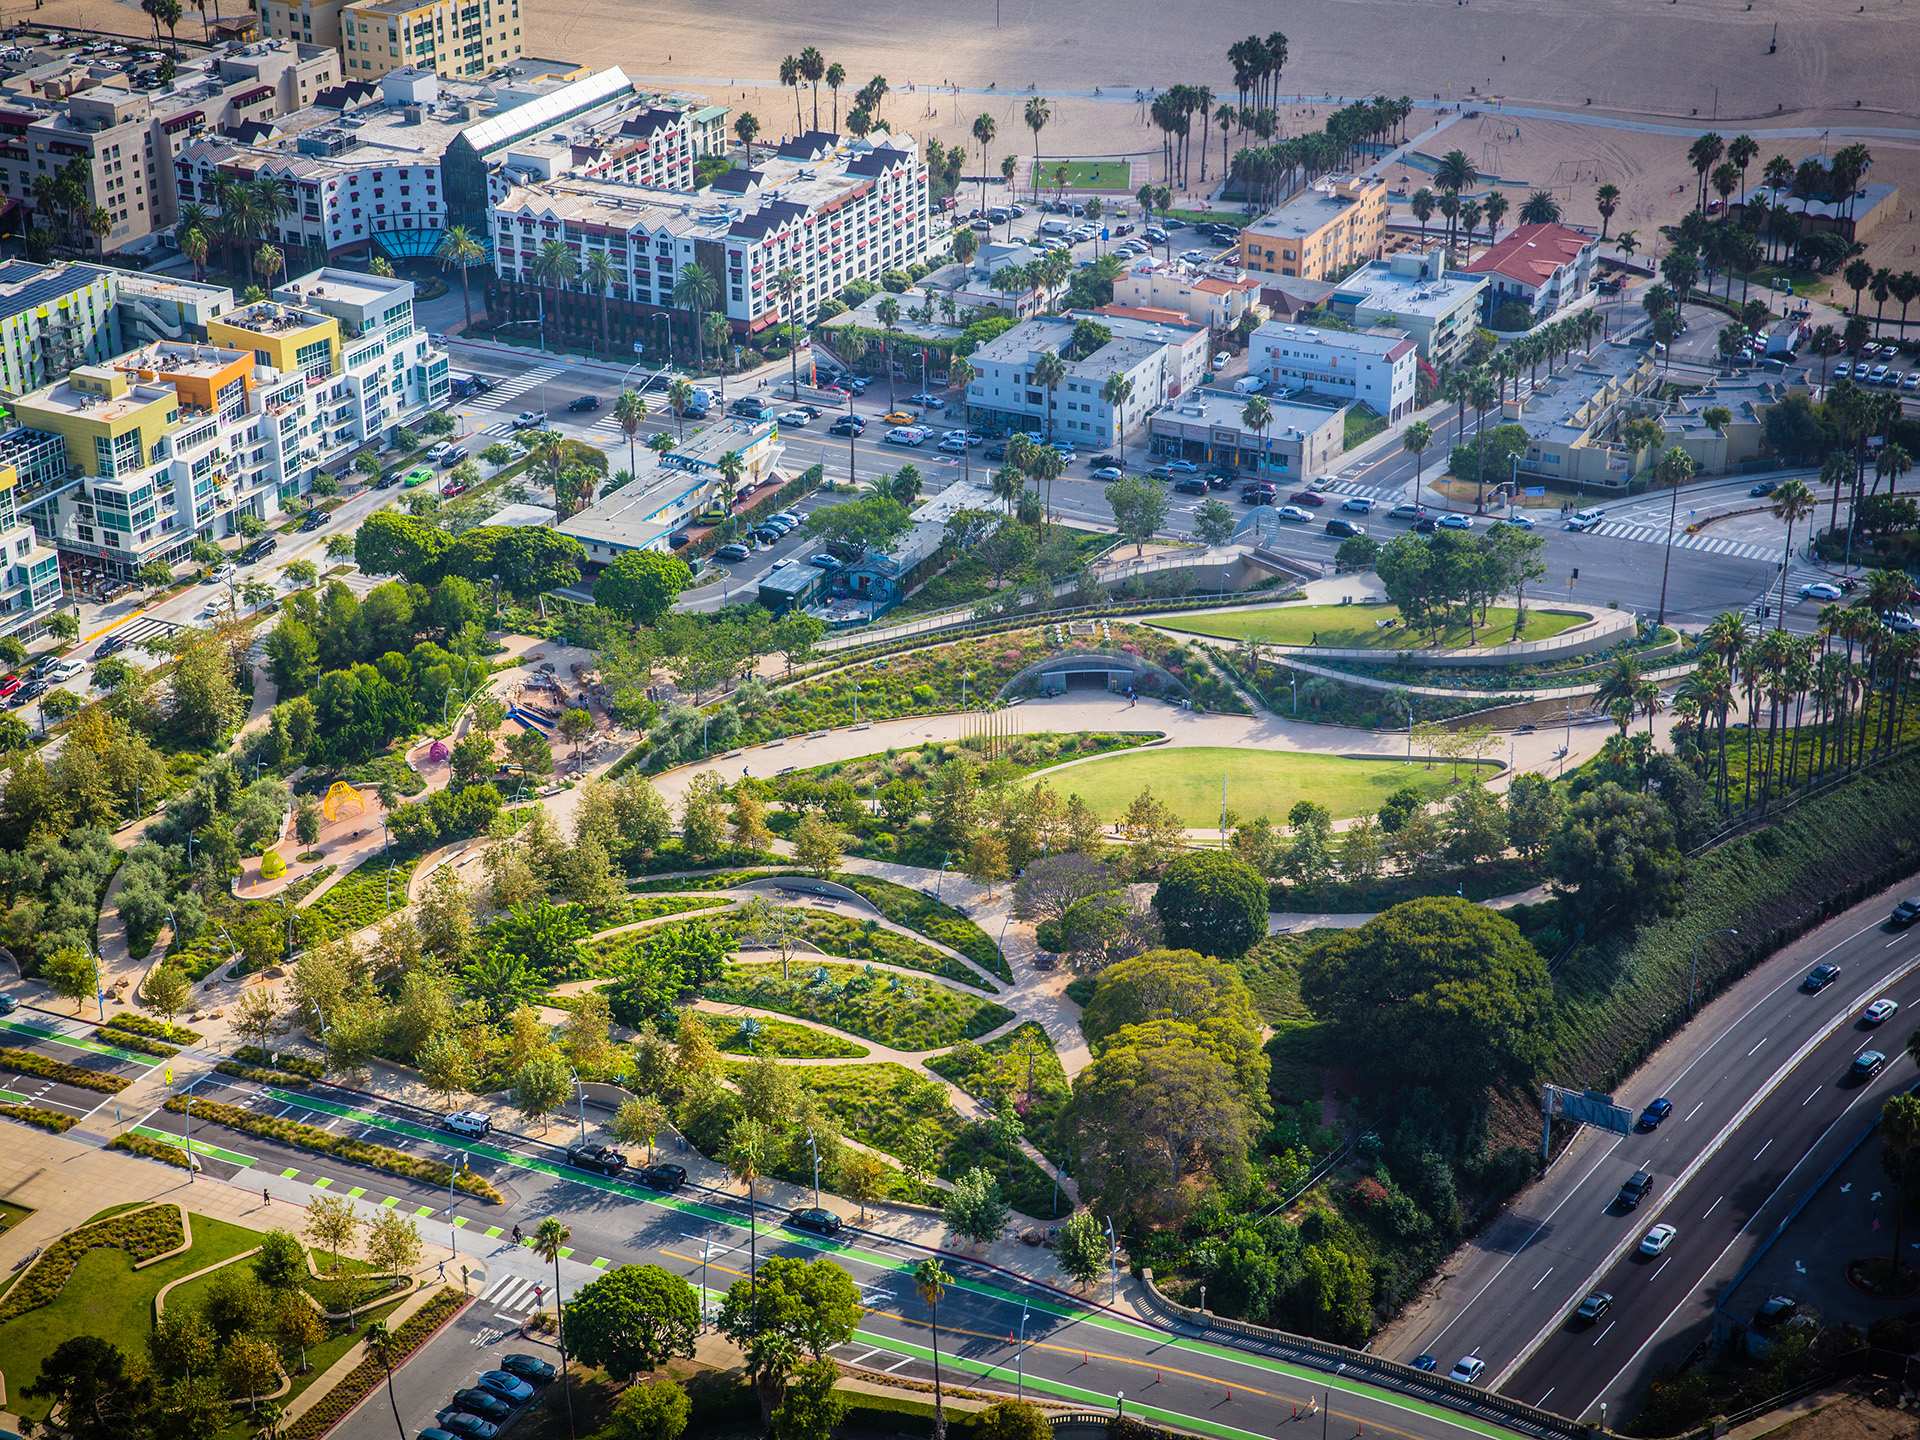 Tongva park and biking trails in Santa Monica